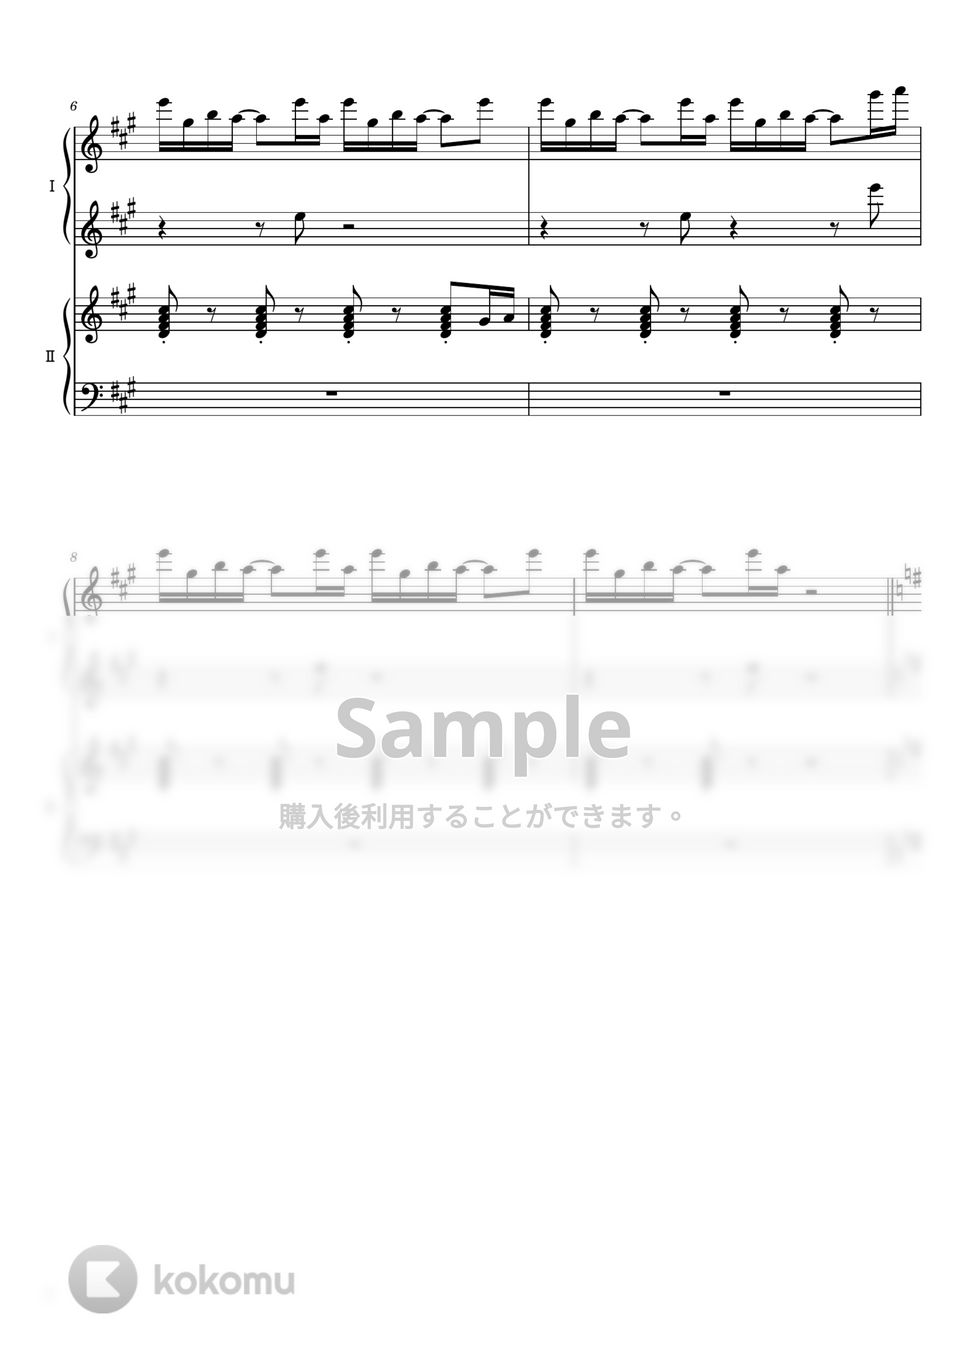 米津玄師 - Pale Blue Full ver. (連弾) by SuperMomoFactory